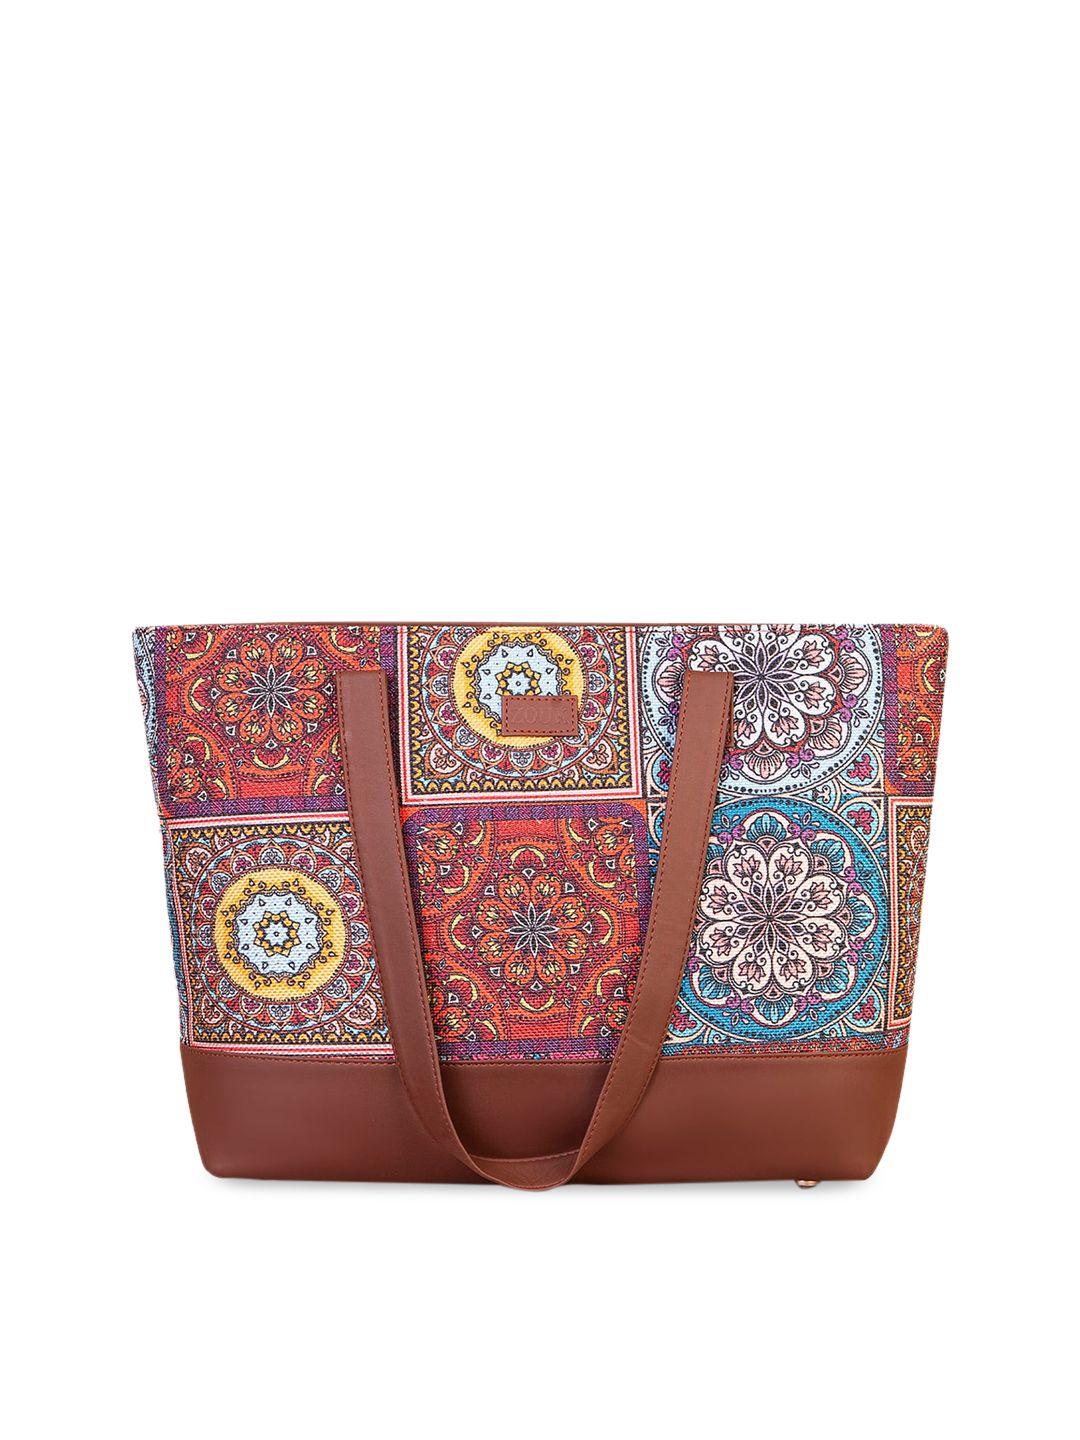 ZOUK Multicoloured Ethnic Motifs Printed Structured Shoulder Bag